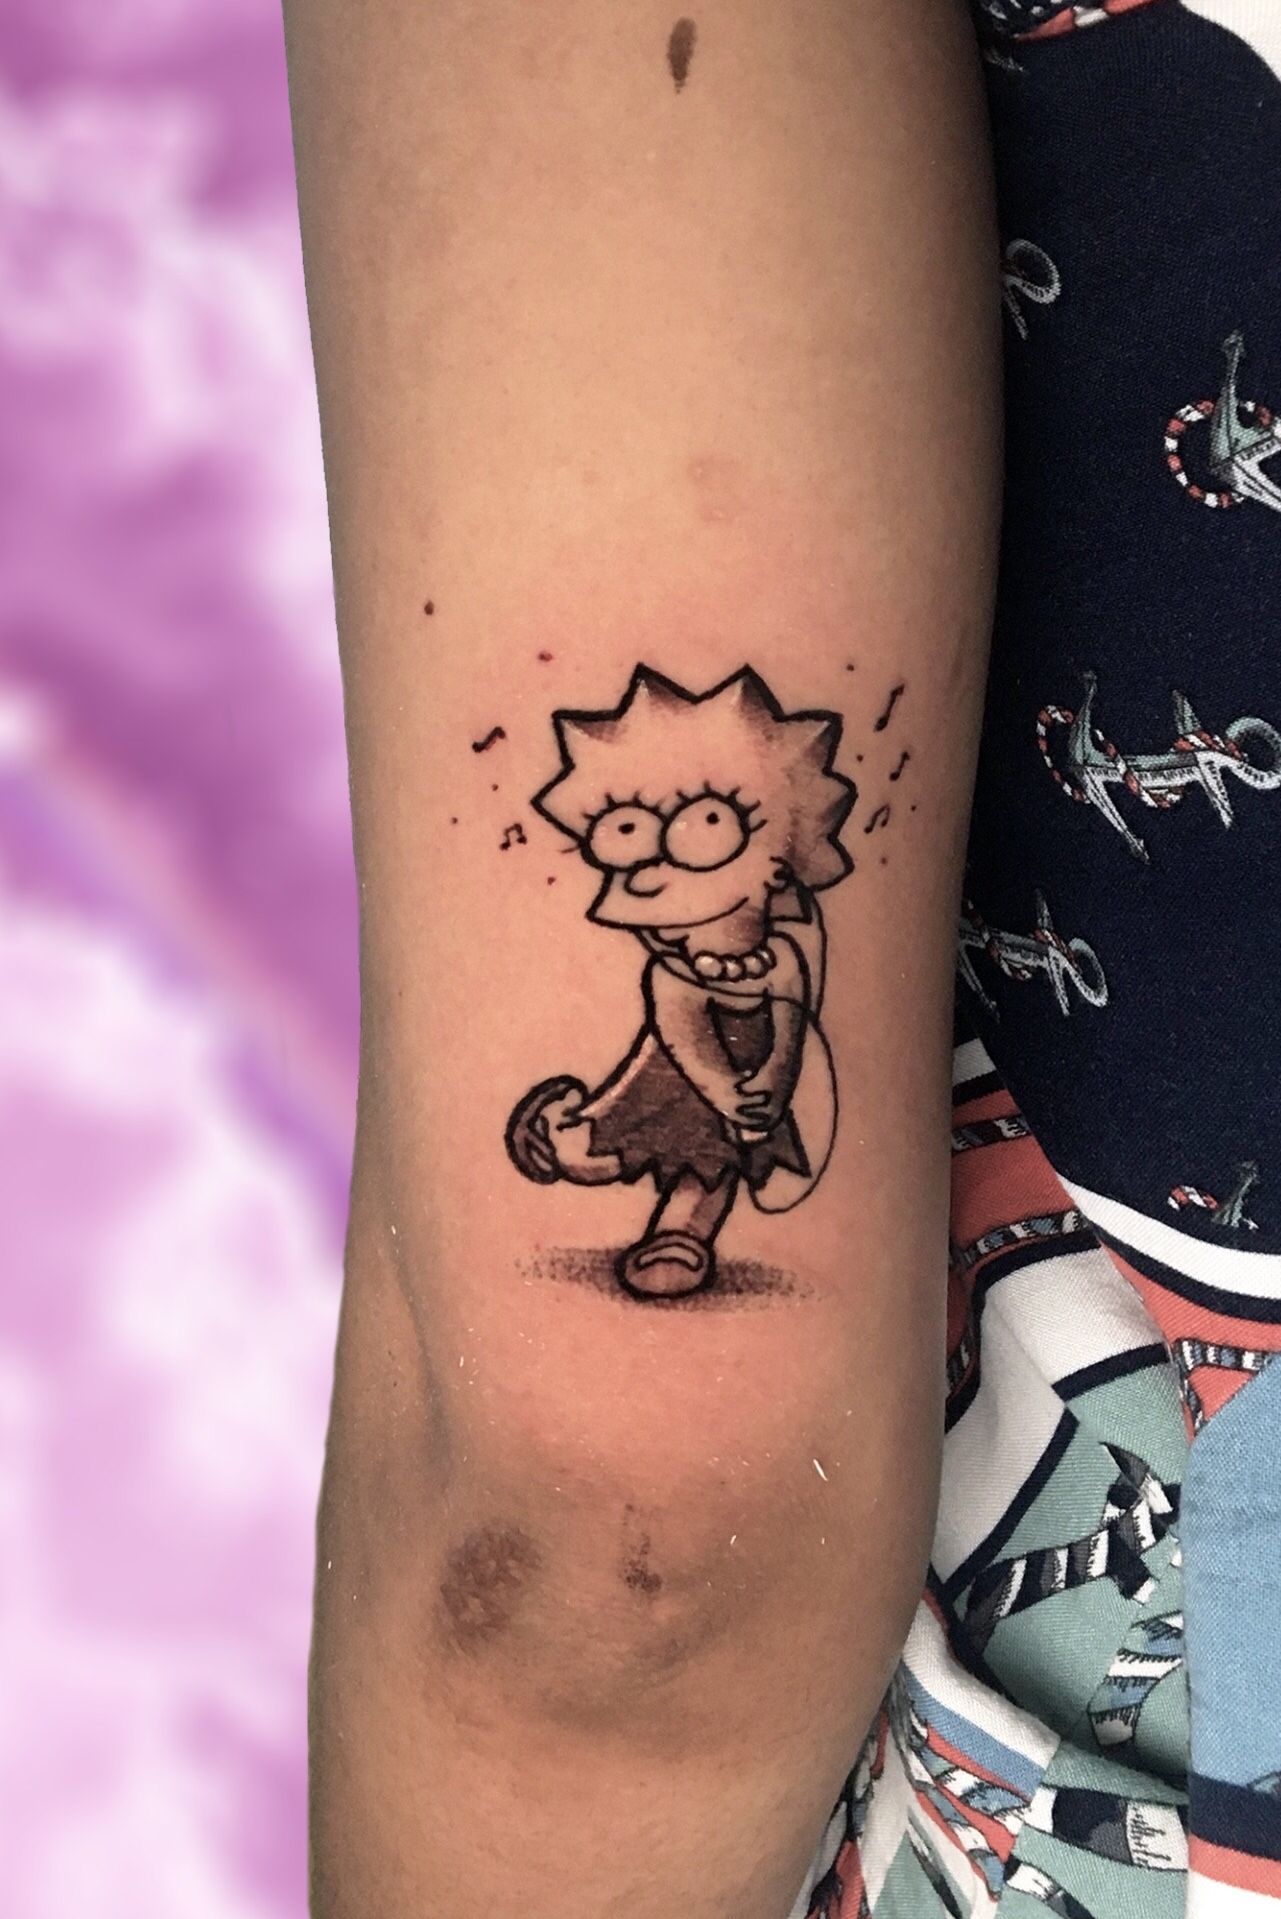 Bart and Lisa tattoo done by Sebastian Tattoo  rnerdtattoos